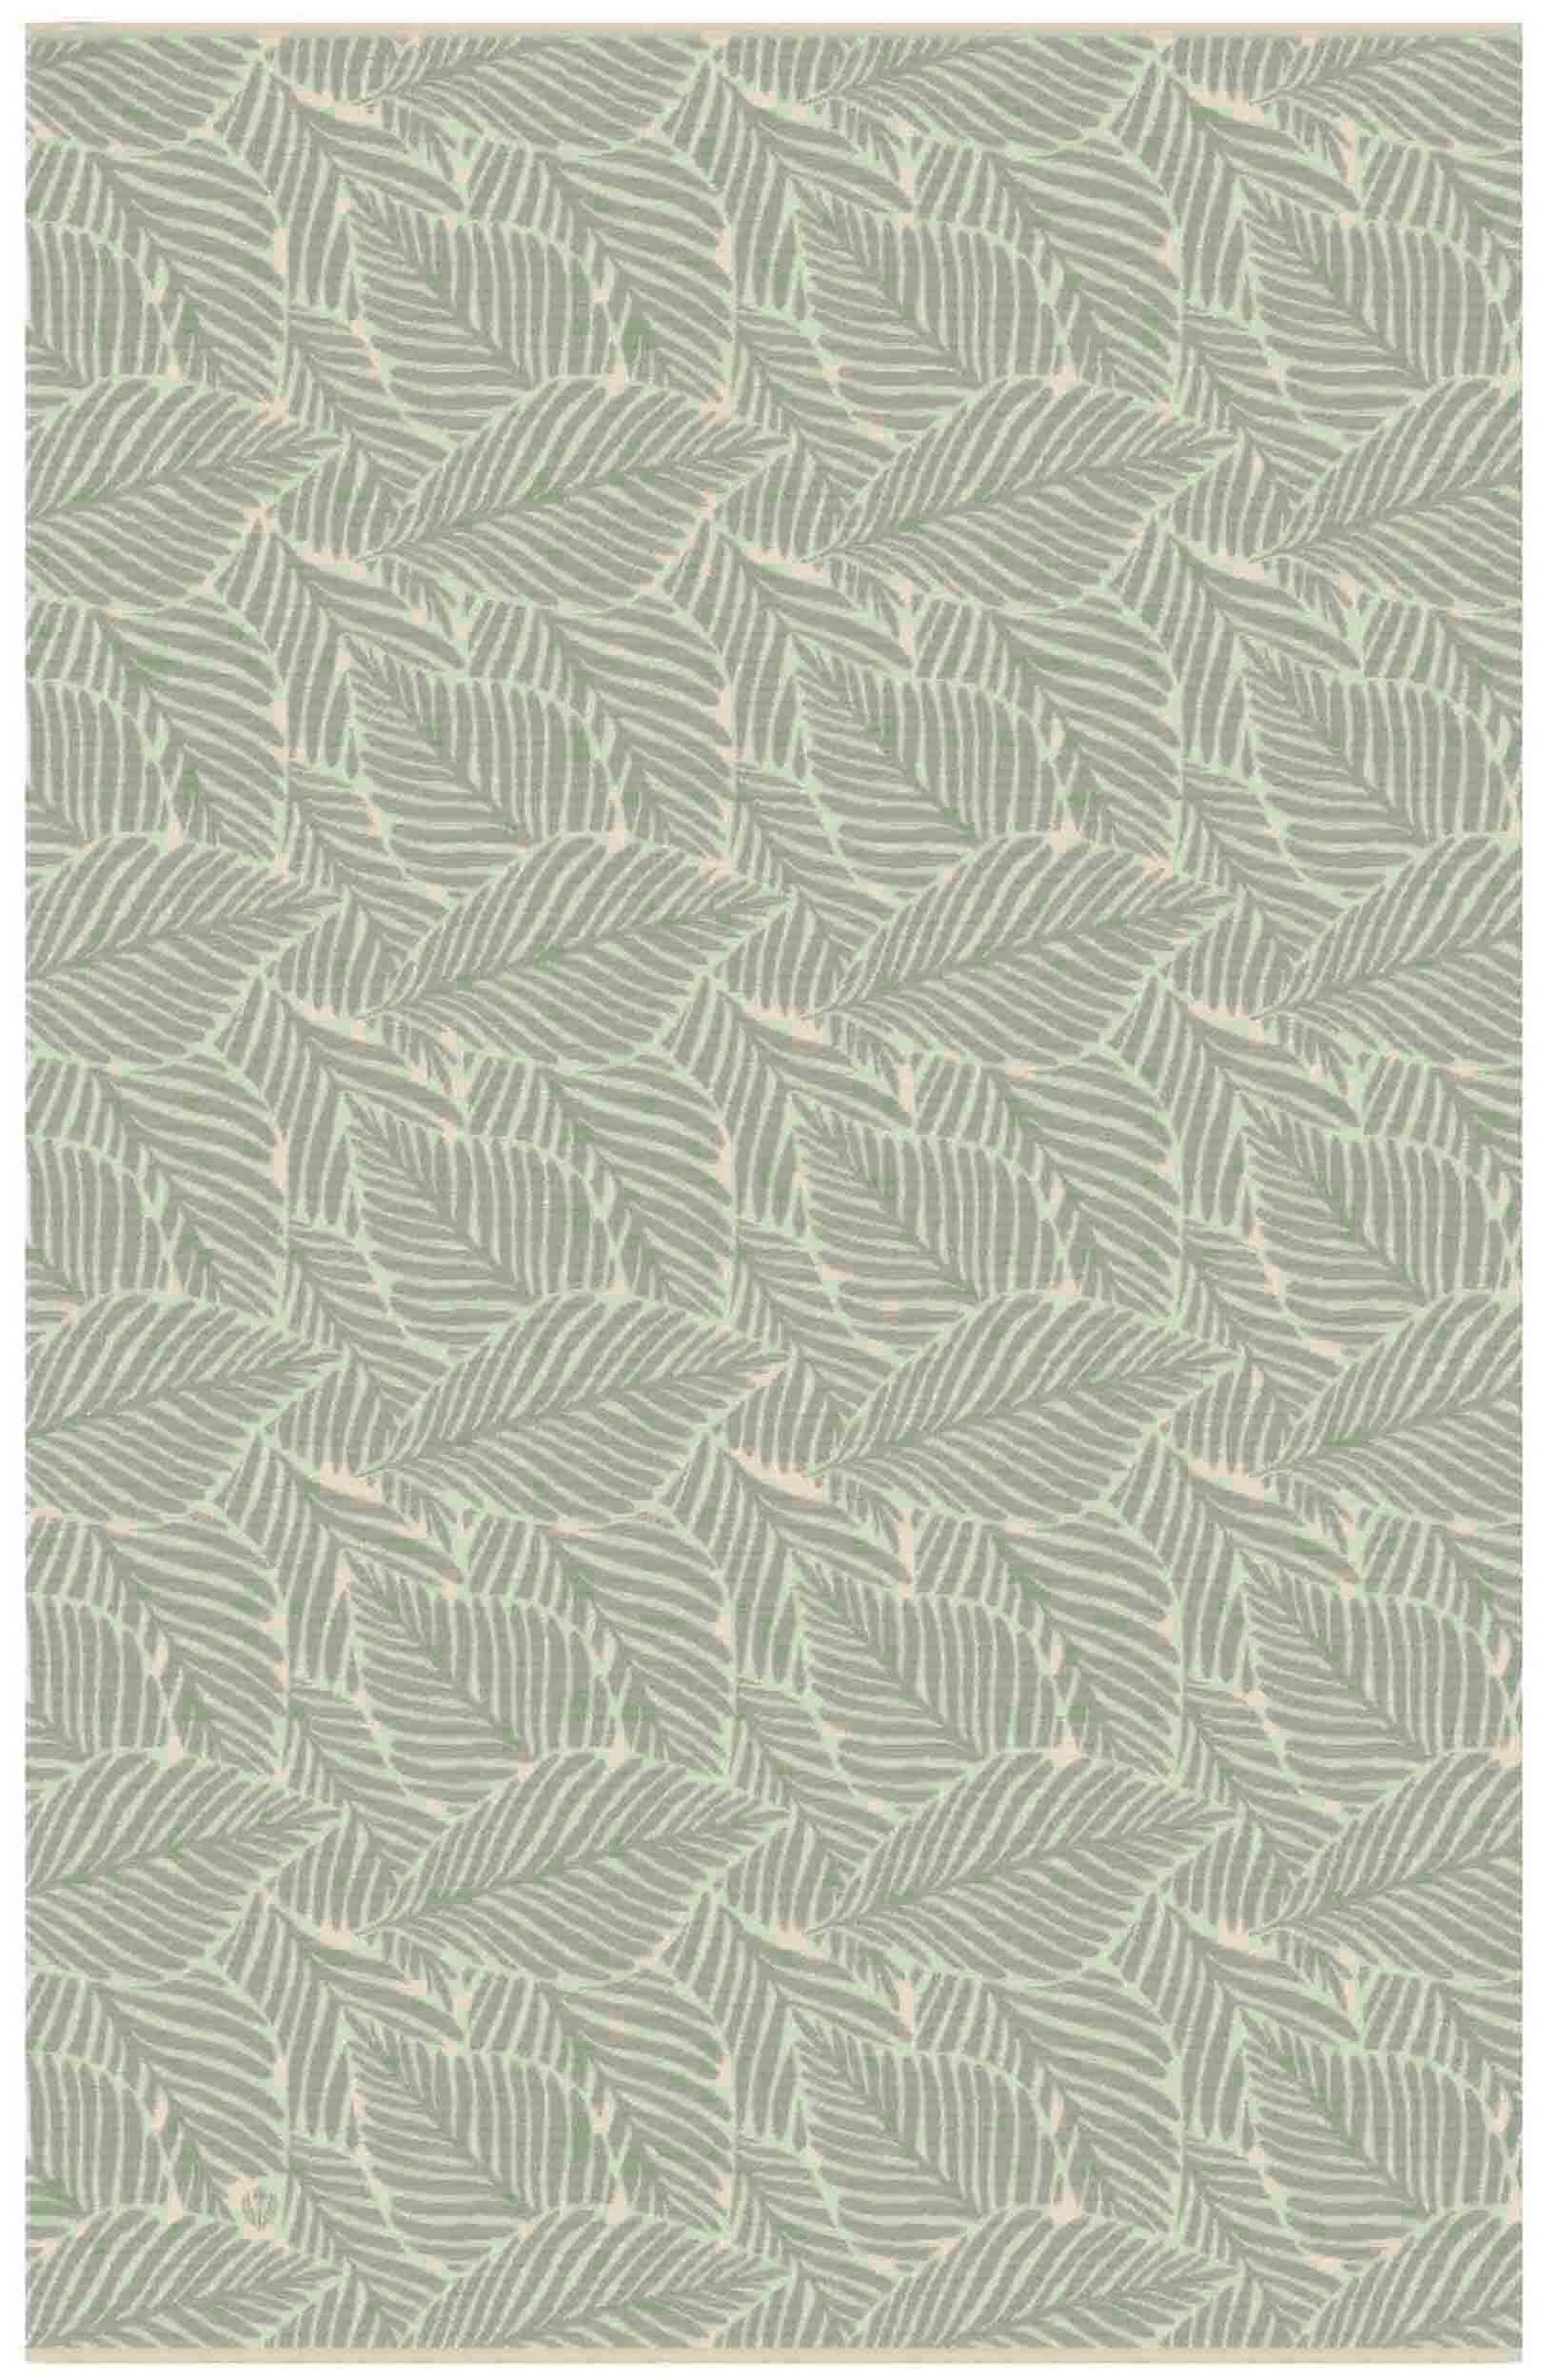 in FRAAS Decke, Blätter-Design Decke Germany Baumwolle Fraas, - mit Plaid Made